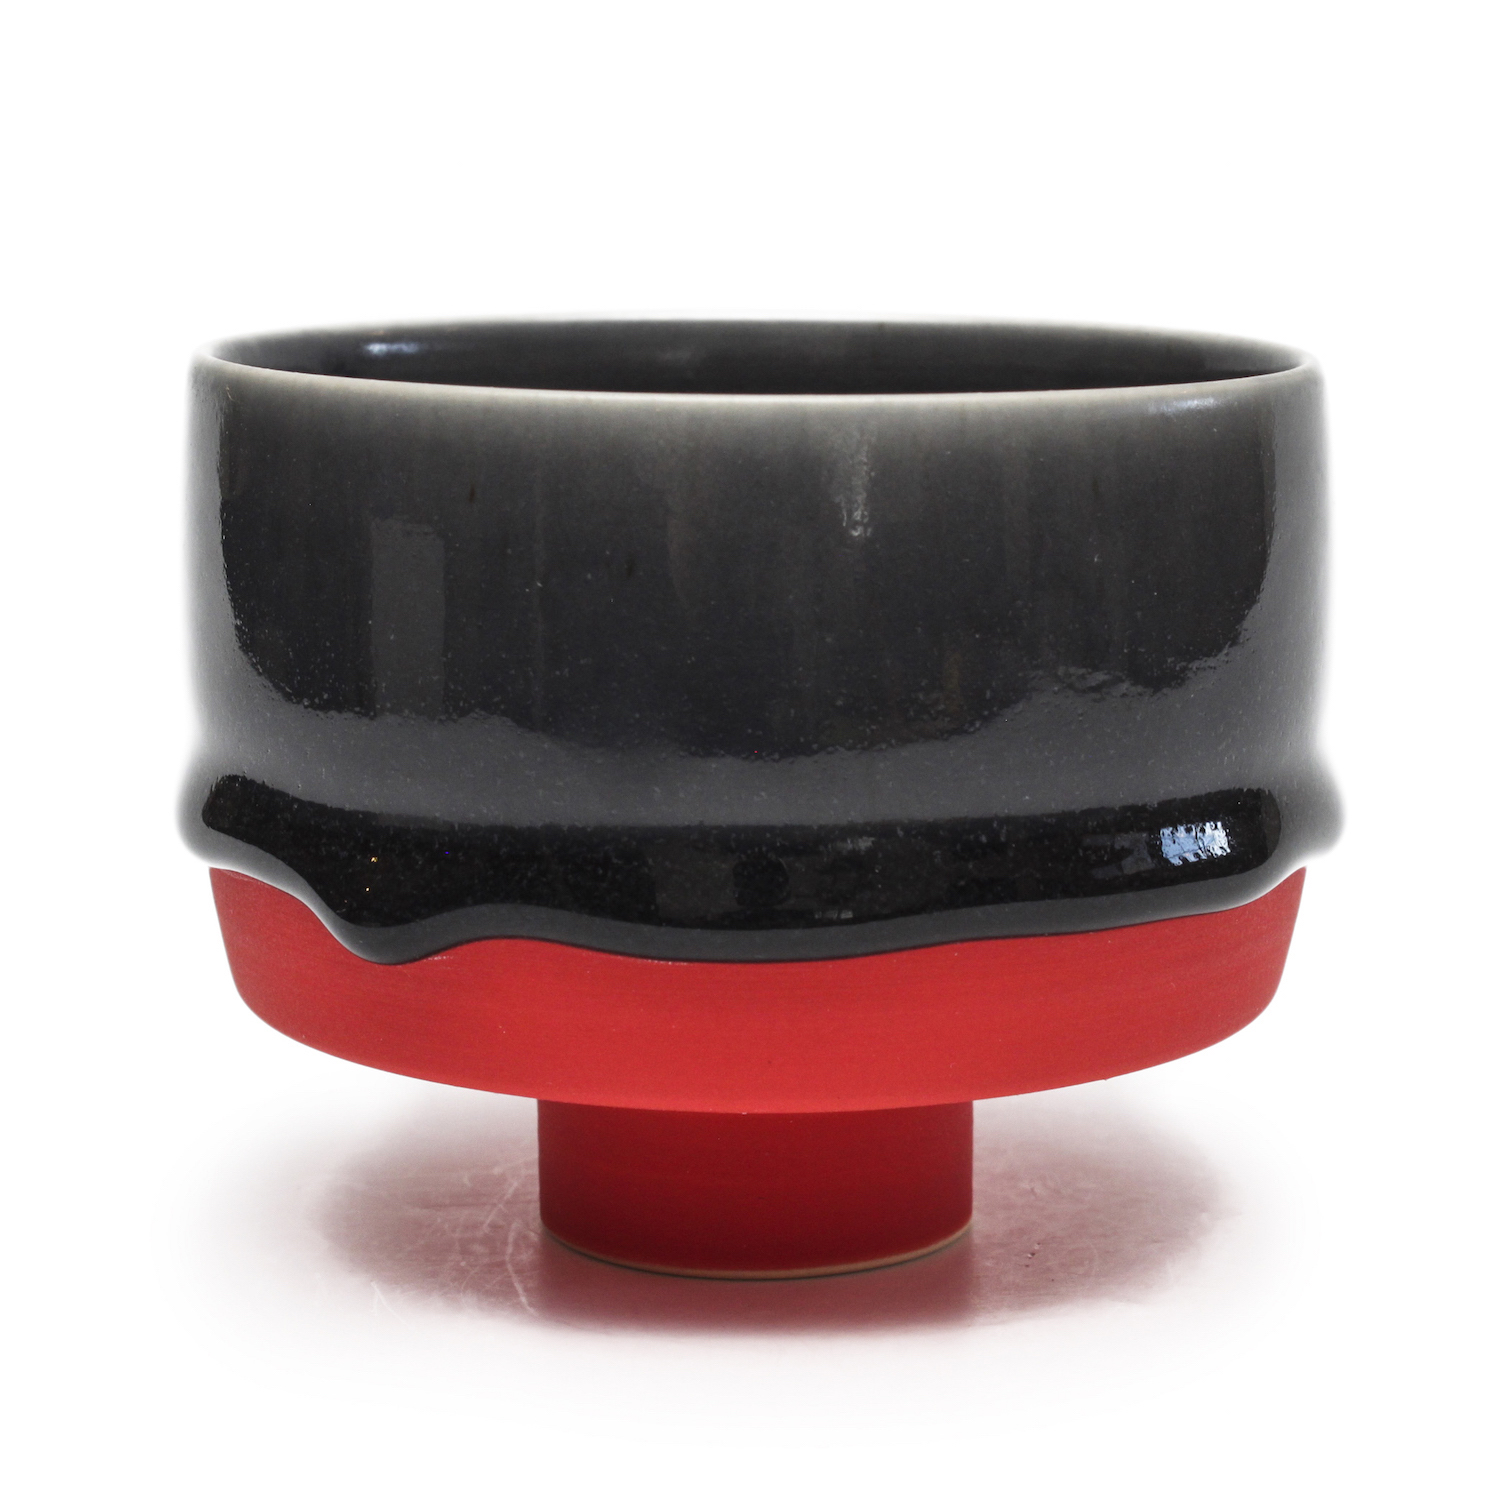 Studio Pottery | Branan Mercer’s Pop Teabowls Dripping in Suspense